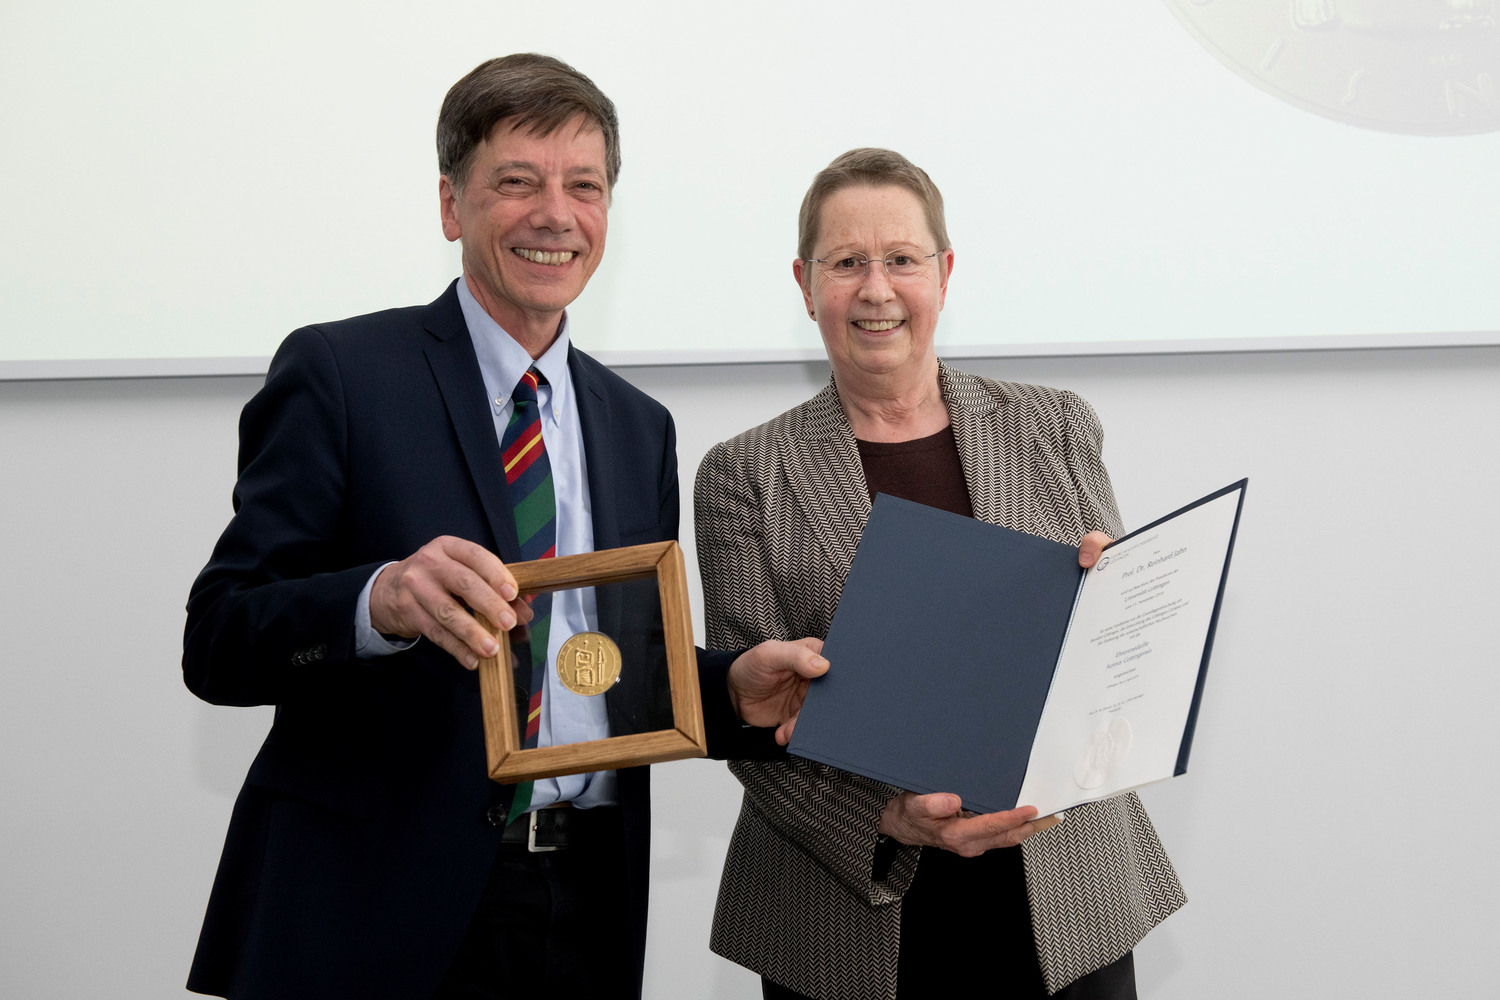 Verleihung der Universitäts-Medaille Aureus Gottingensis an Prof. Dr. Reinhard Jahn durch Universitätspräsidentin Prof. Dr. Ulrike Beisiegel